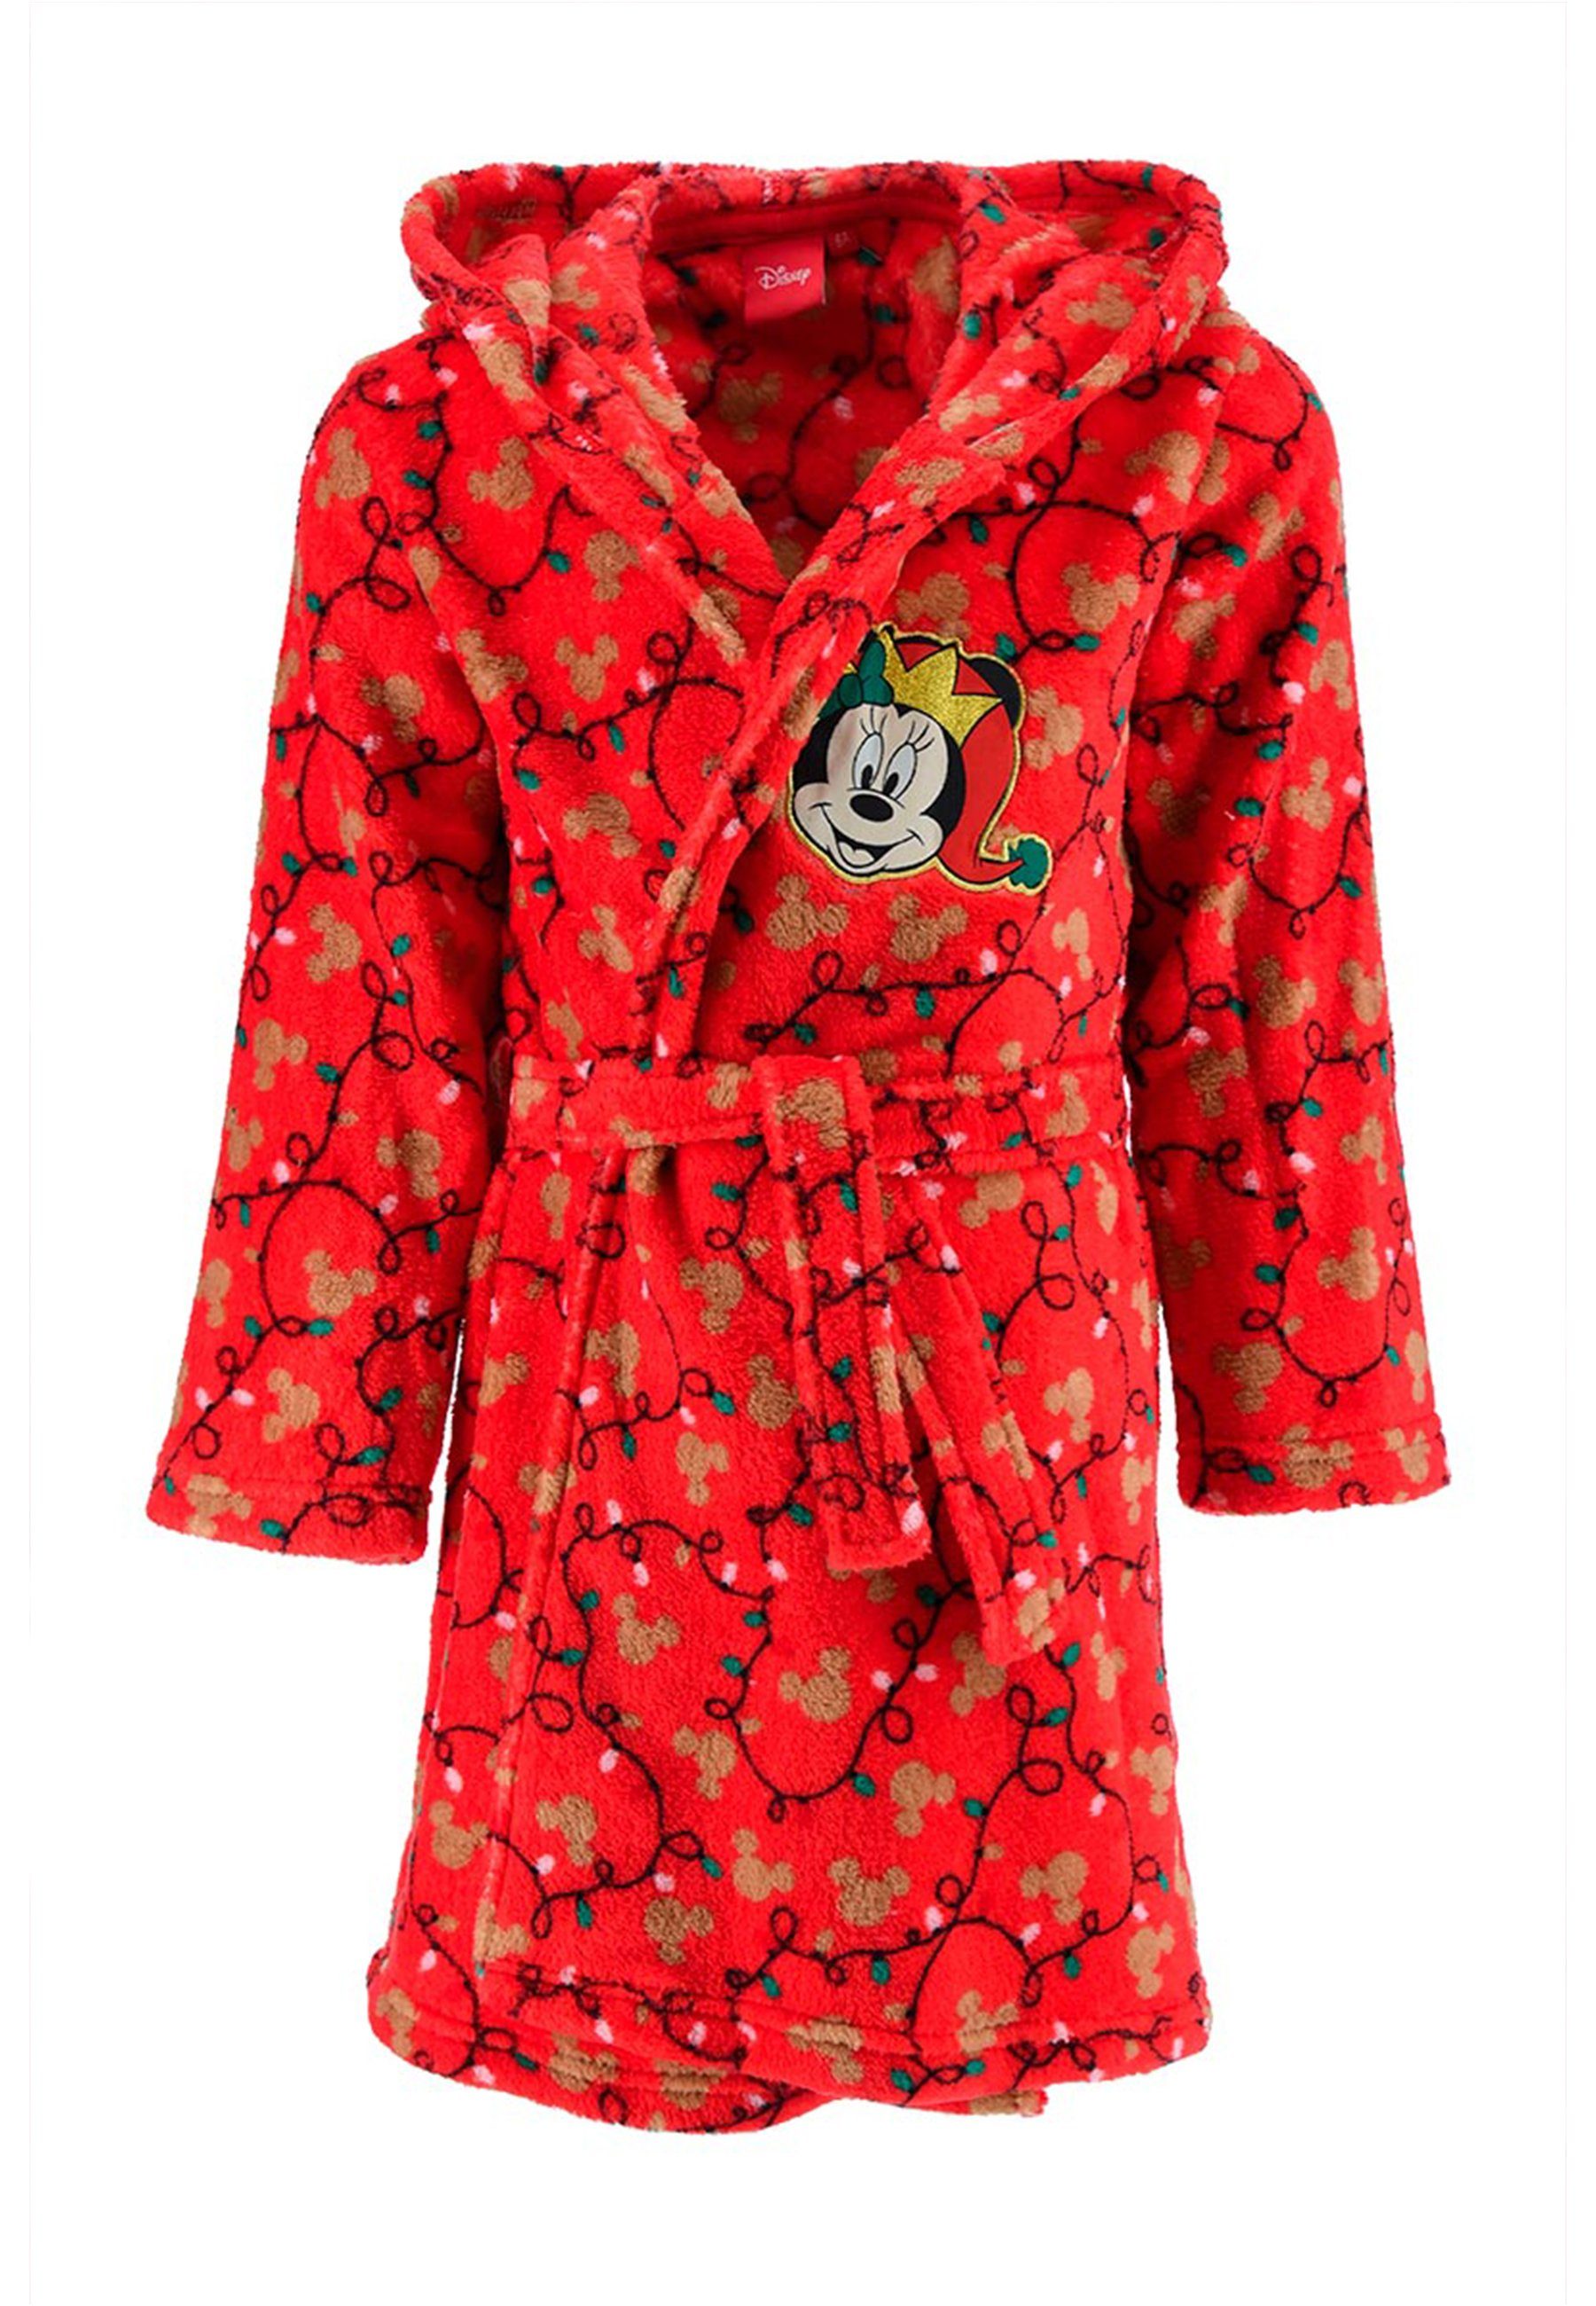 Disney Minnie Mouse Kinderbademantel Kinder Mädchen Bademantel Morgenmantel Rot